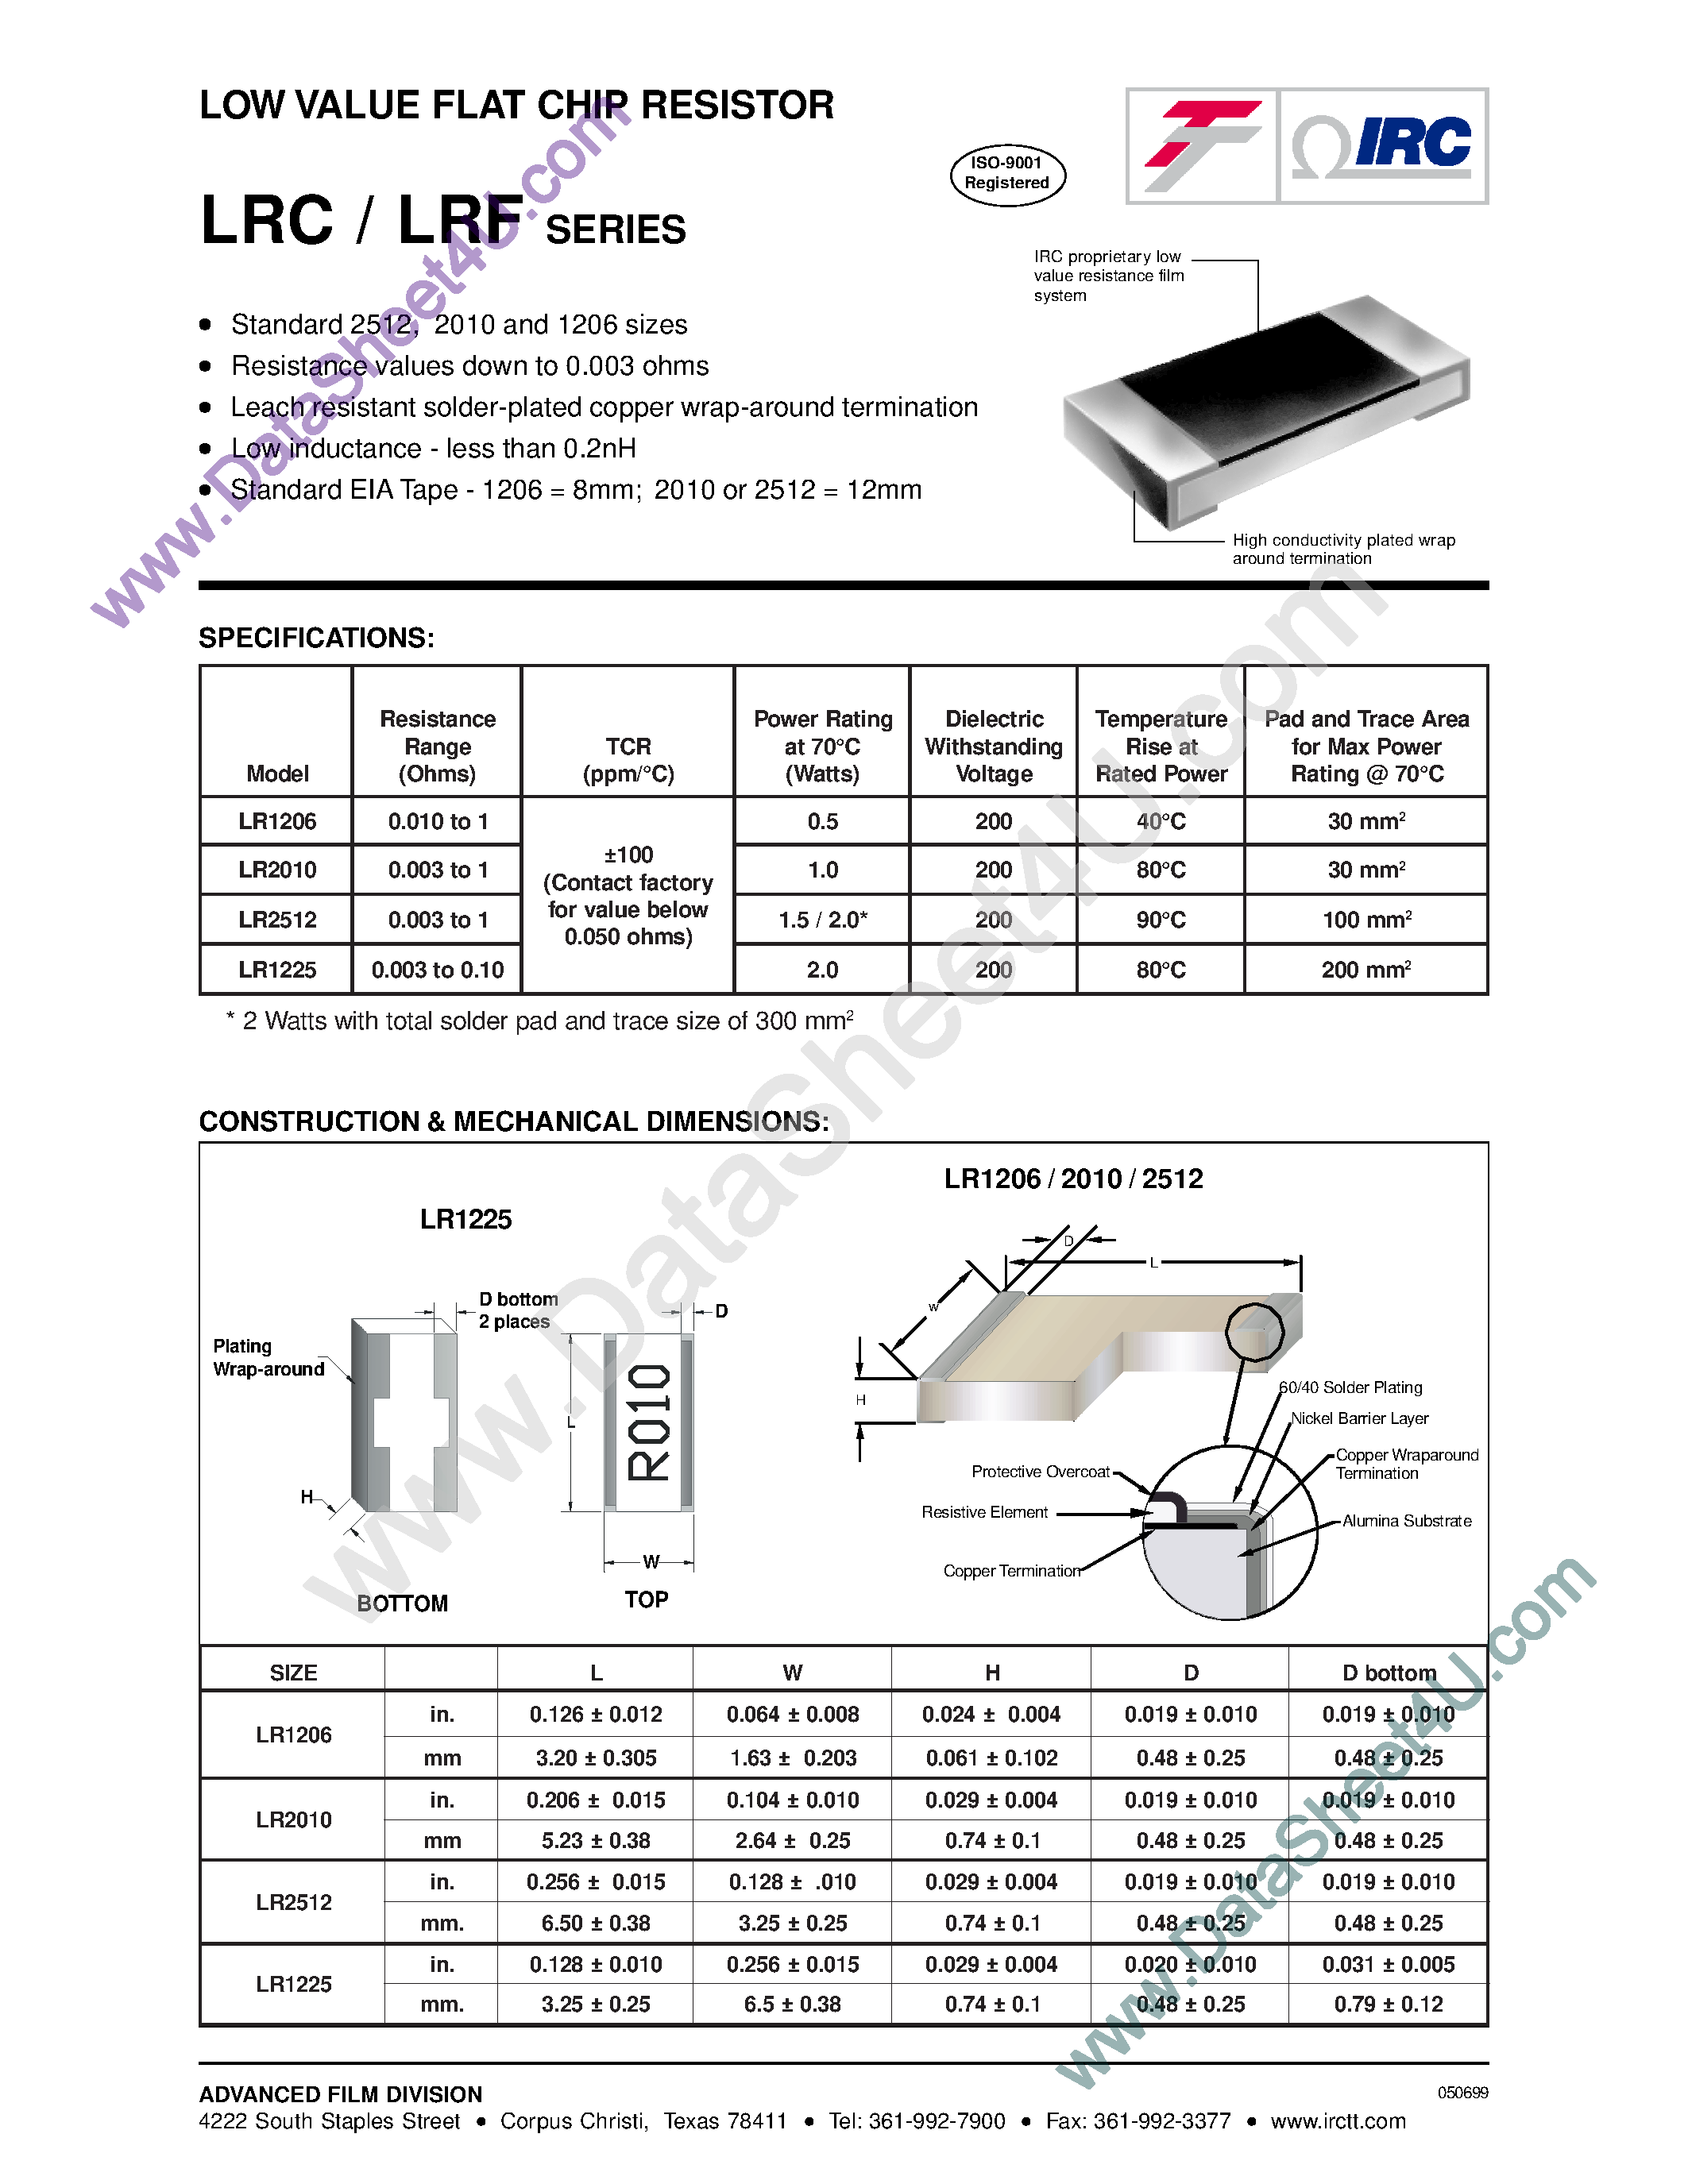 Даташит LRC-LR1206-xxxx - (LRC / LRF Series) Low Value Flat Chip Resistor страница 1